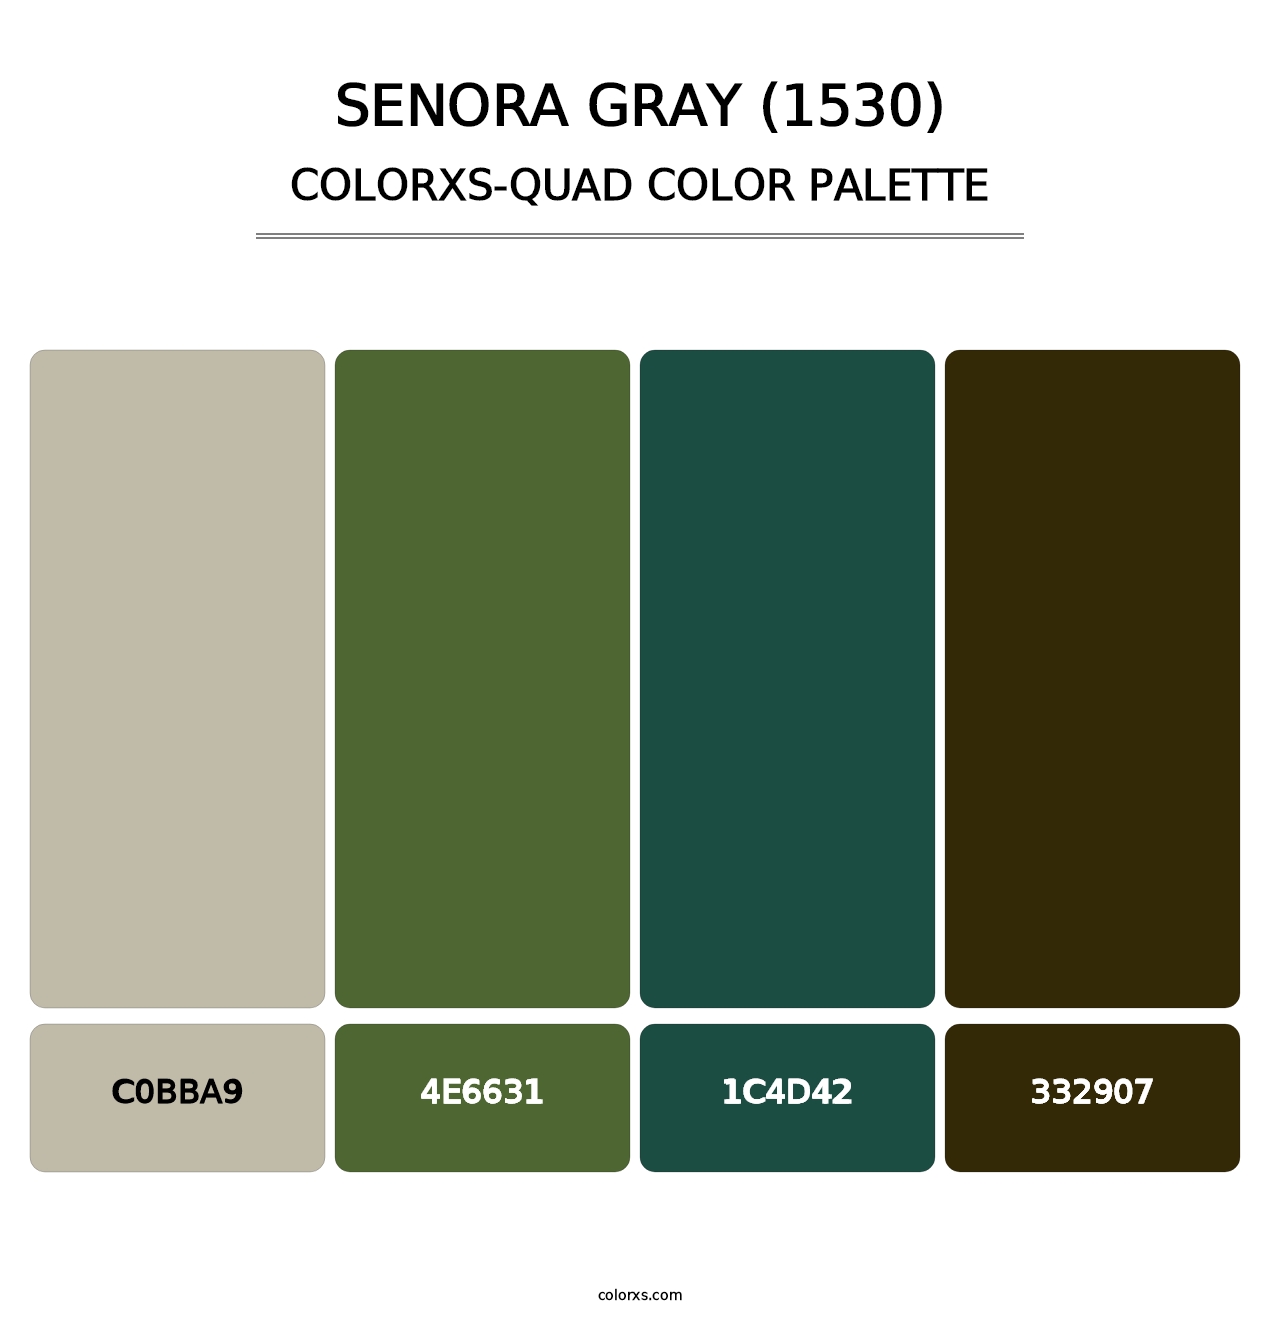 Senora Gray (1530) - Colorxs Quad Palette